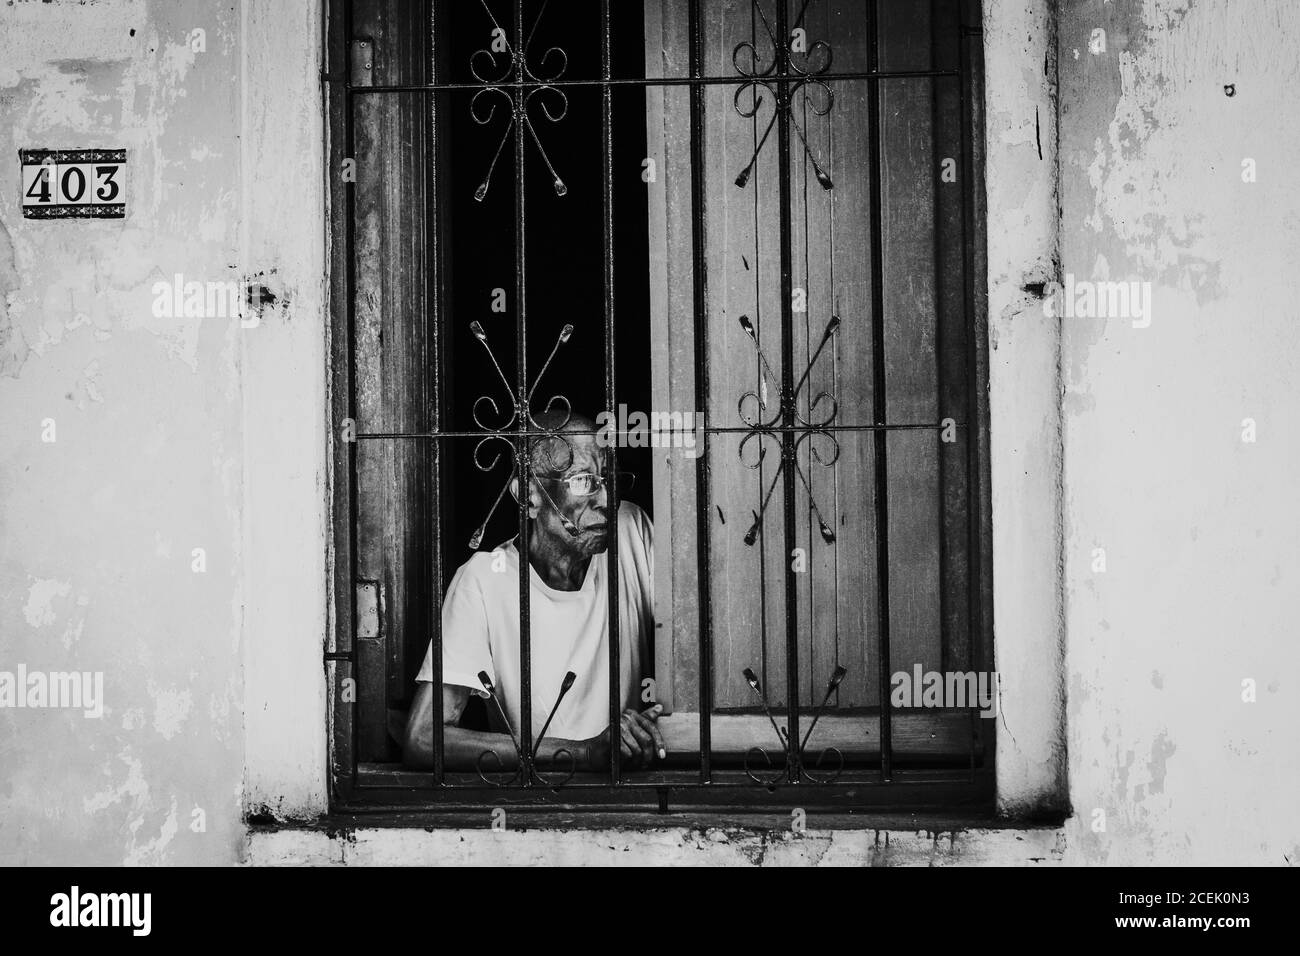 LA HABANA, CUBA - MAY 1, 2018: Black and white shot of elderly man in window with metal bars looking away on street, Cuba. Stock Photo